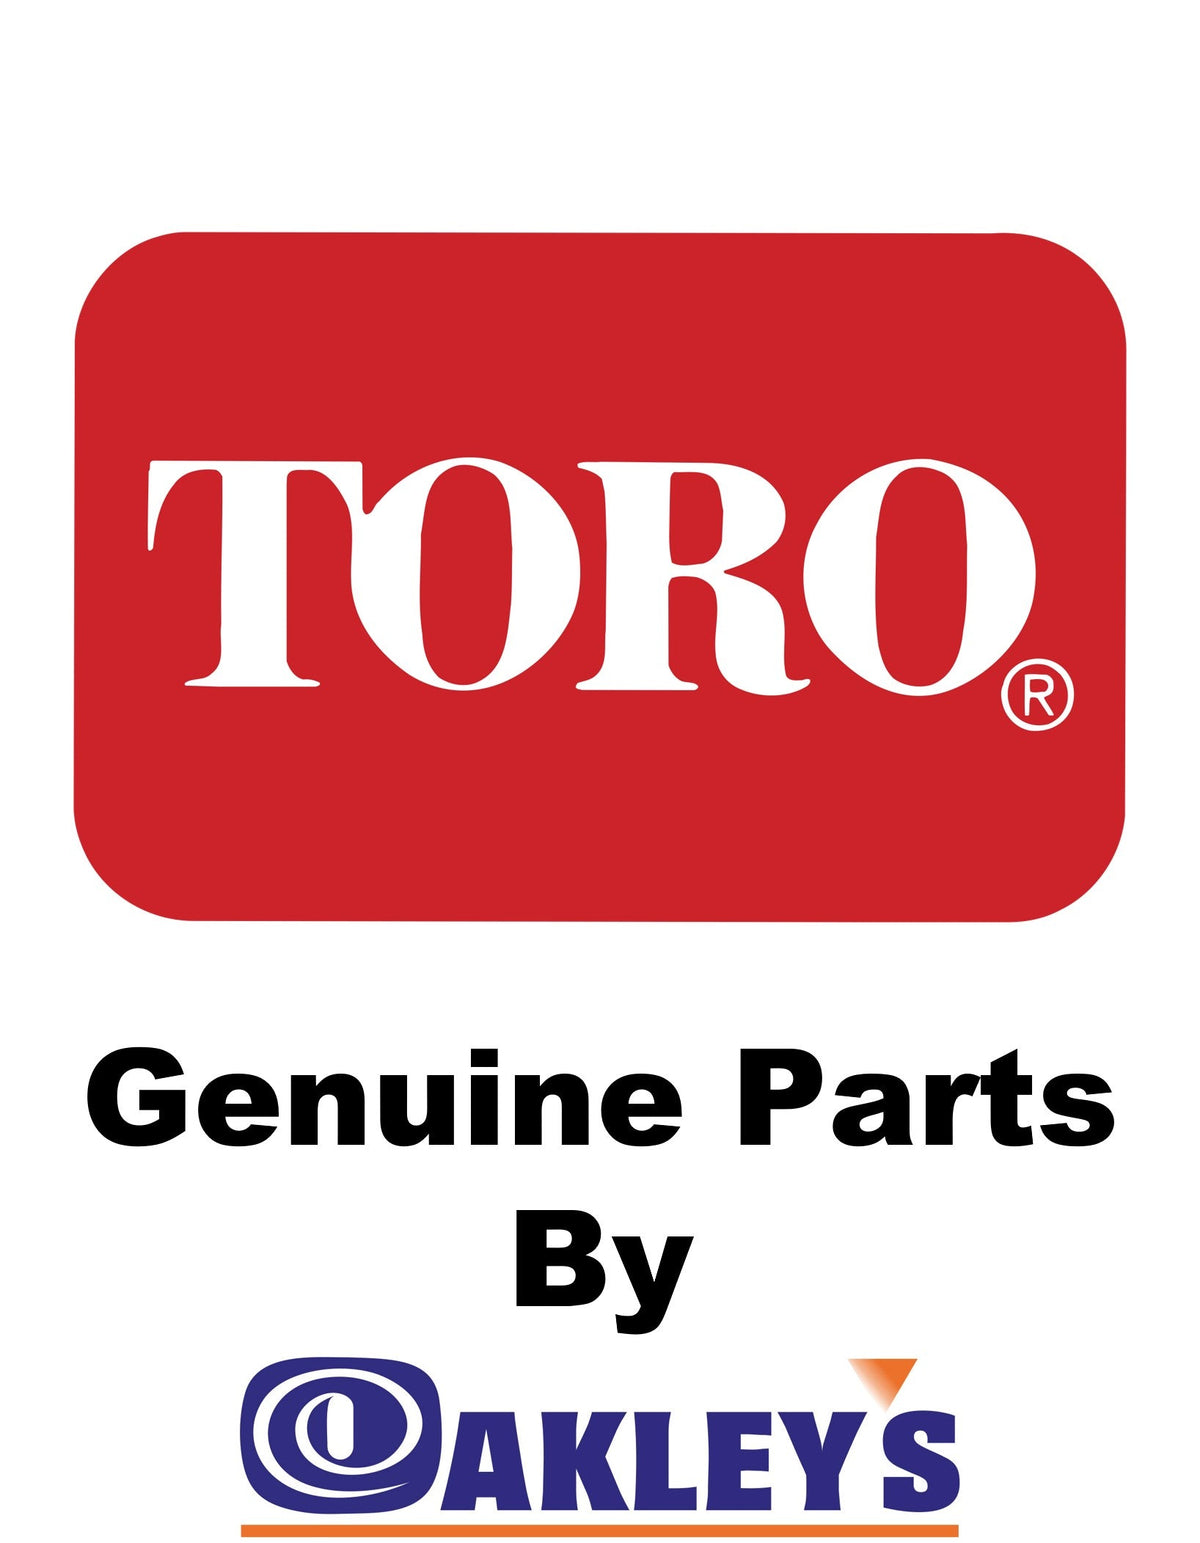 Toro 0-RING - Genuine Part - (104-7715)